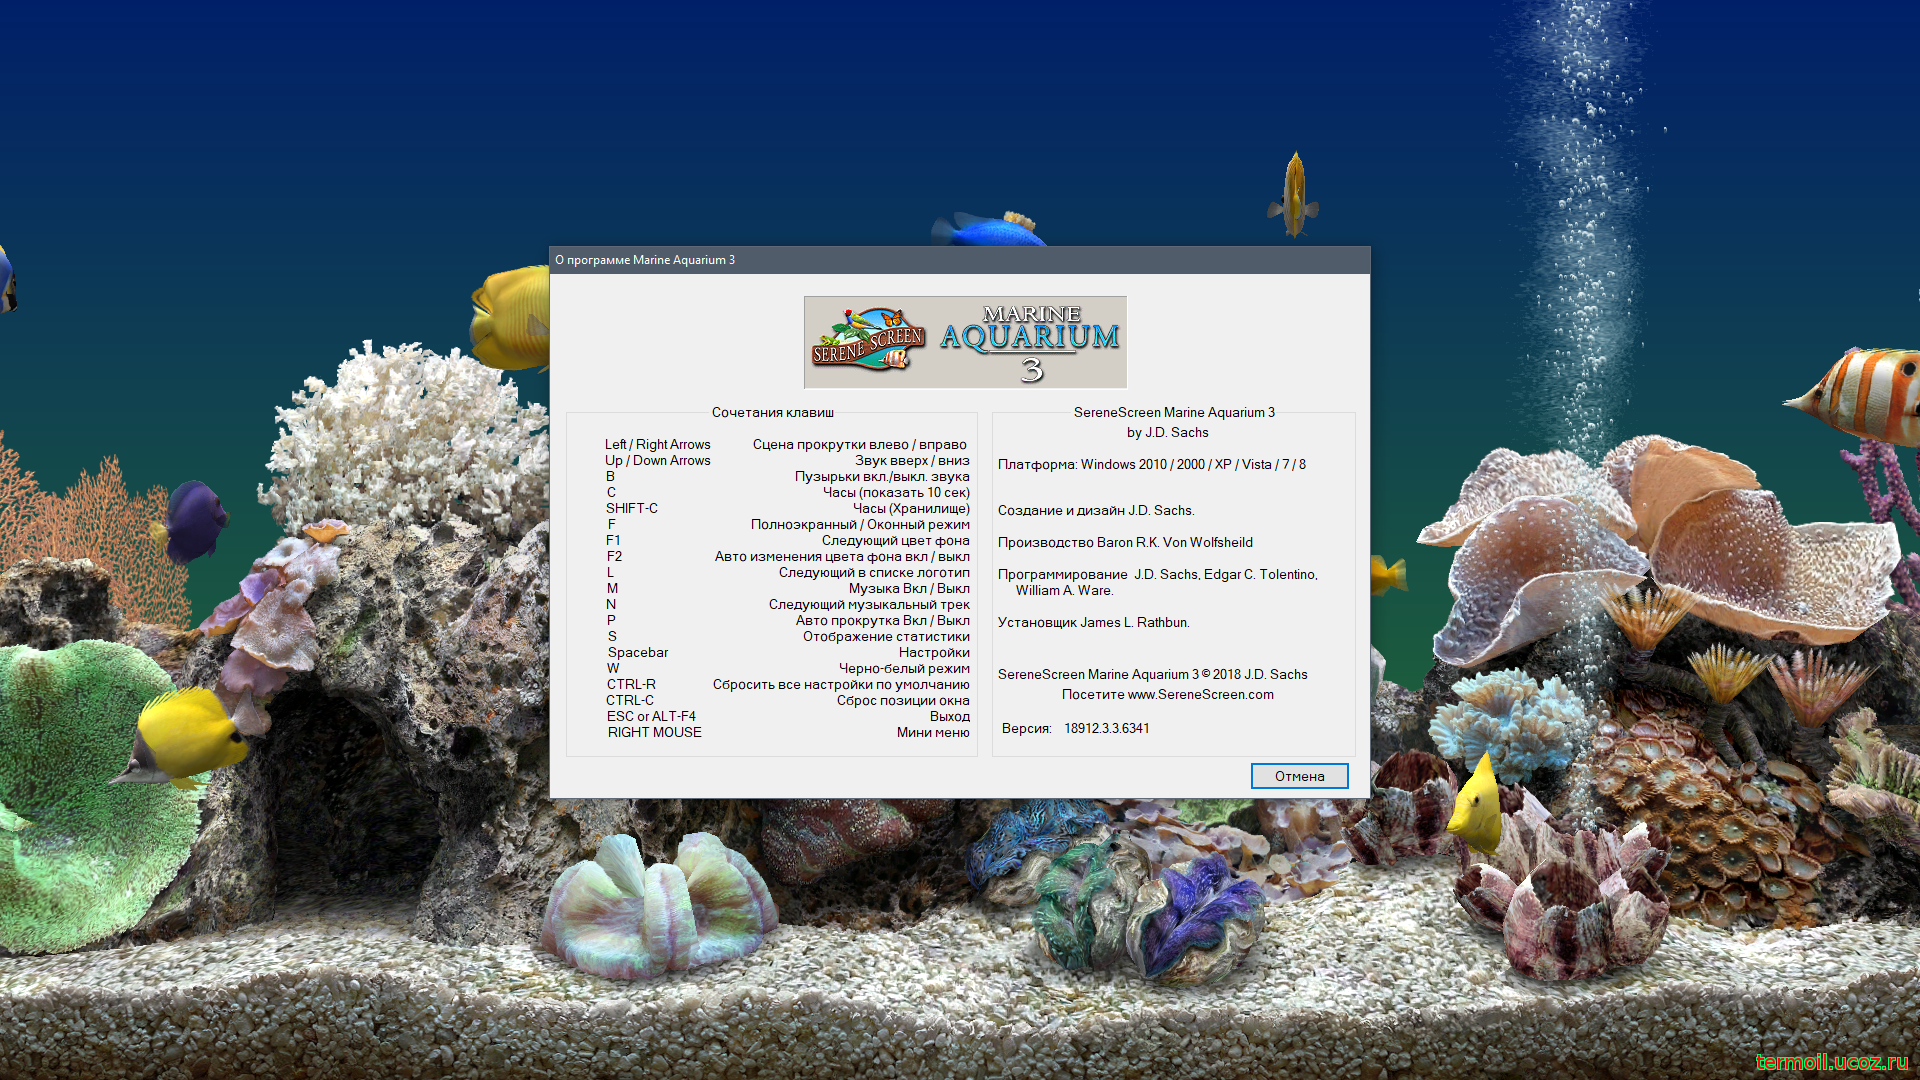 Marine aquarium. Аквариум на рабочий стол. Заставка Marine Aquarium 3. 3d аквариум на рабочий стол. Скринсейвер аквариум для Windows 10.